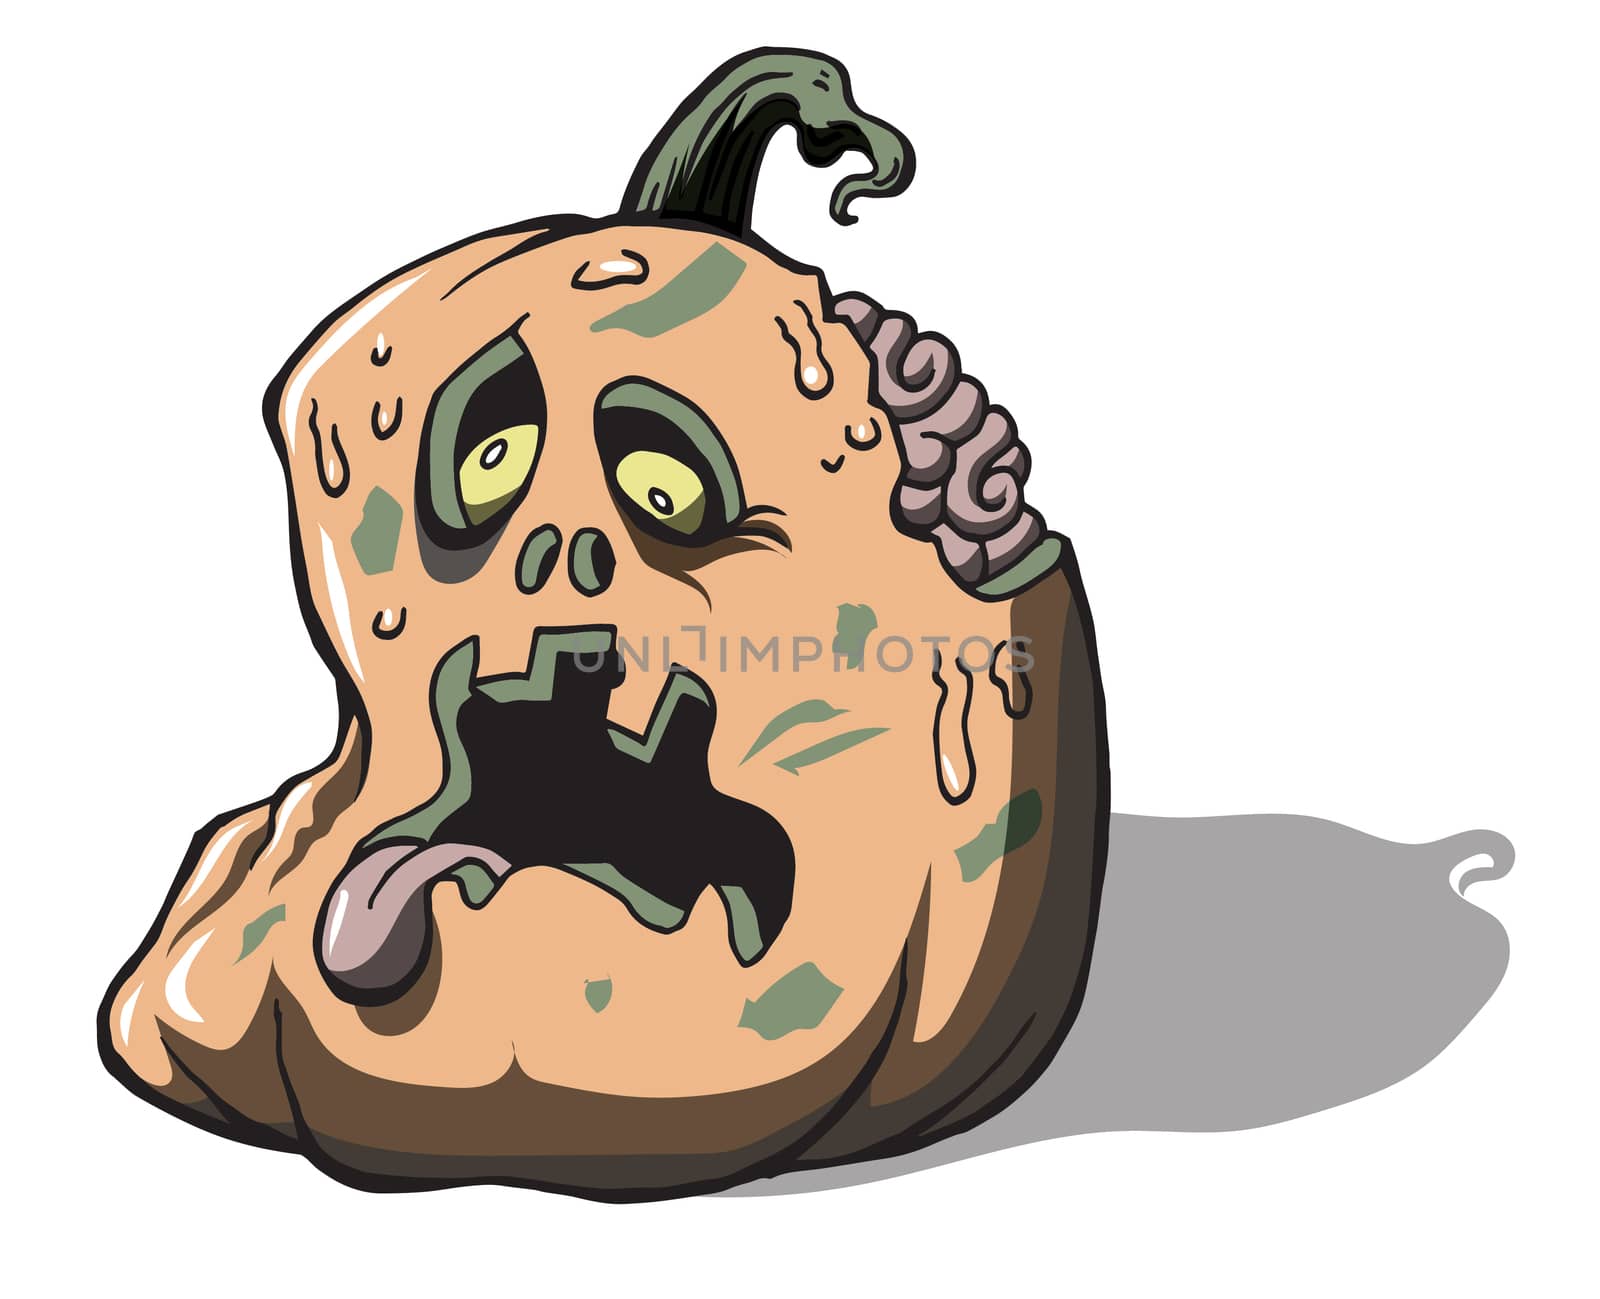 Zombie Jack-o-Lantern in decayed rotten state orange illustration